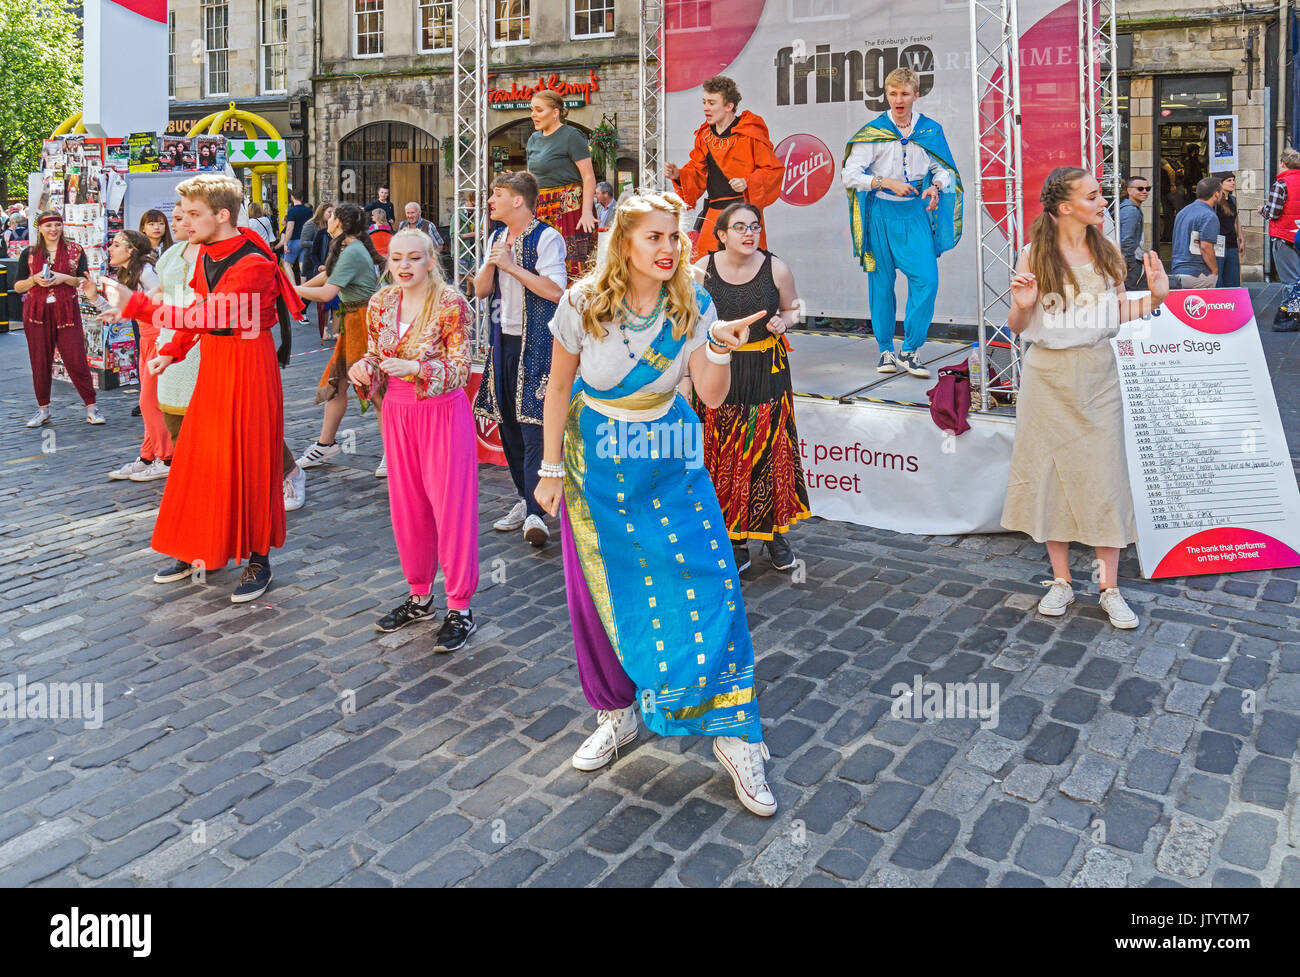 Artistic group Aladdin performing at Edinburgh Festival Fringe 2017 in the High Street of the Royal Mile Edinburgh Scotland UK Stock Photo